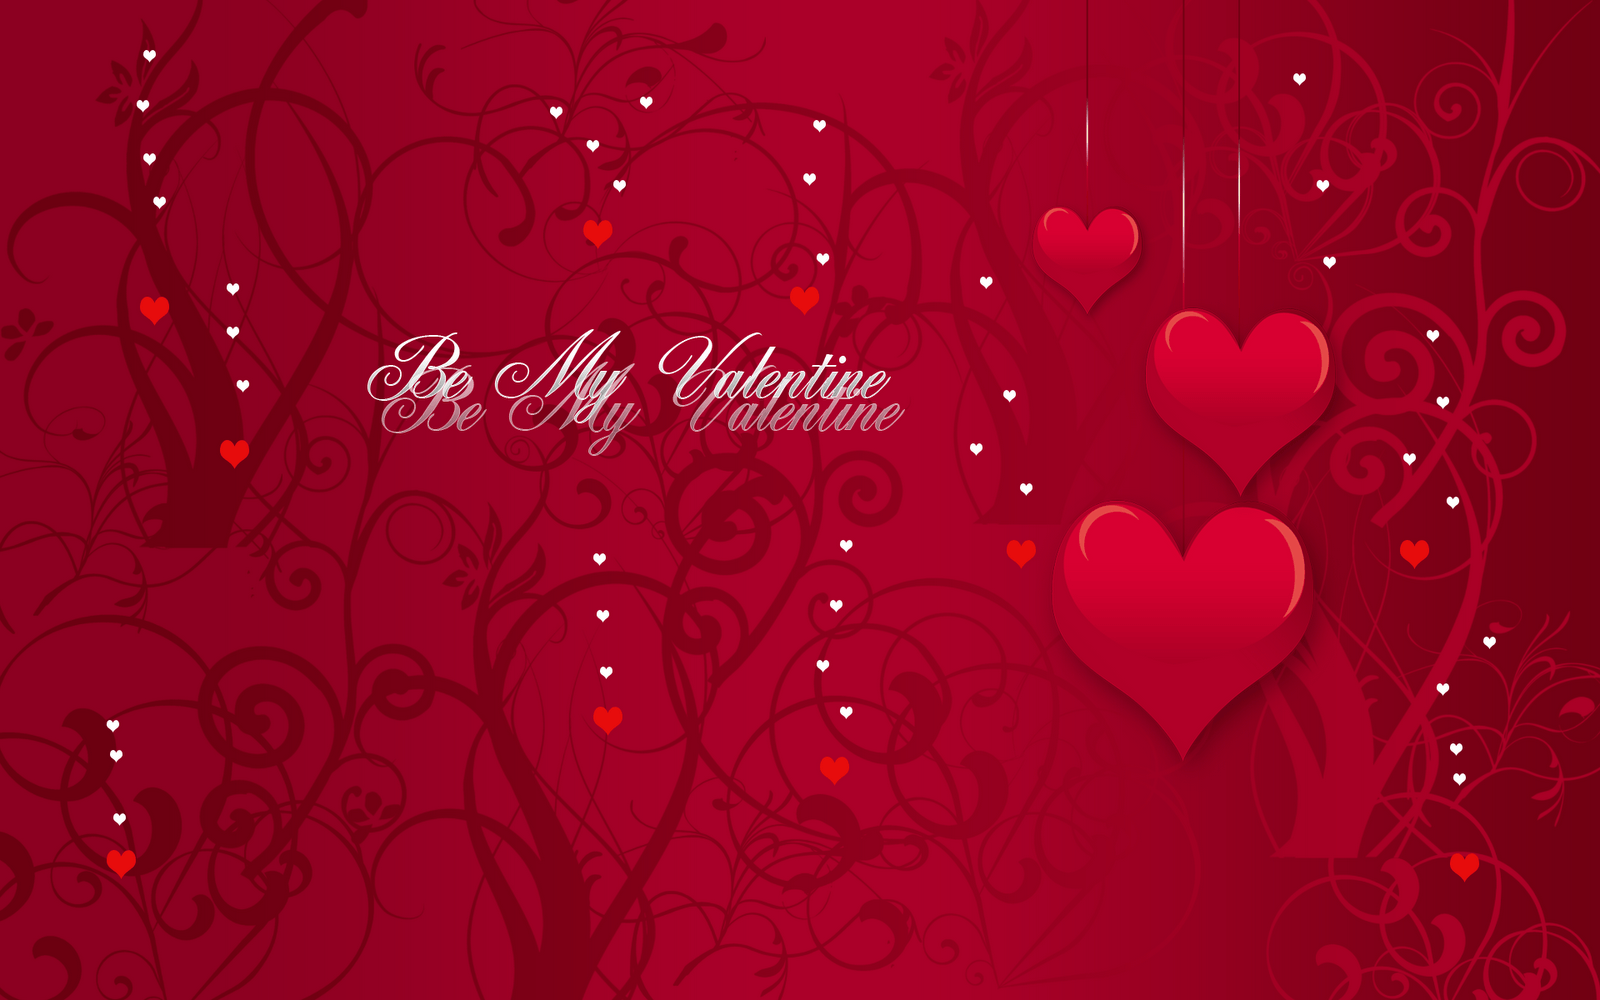 Cute Valentines Day Wallpaper Heart Disney Puppy for iPhone Desktop